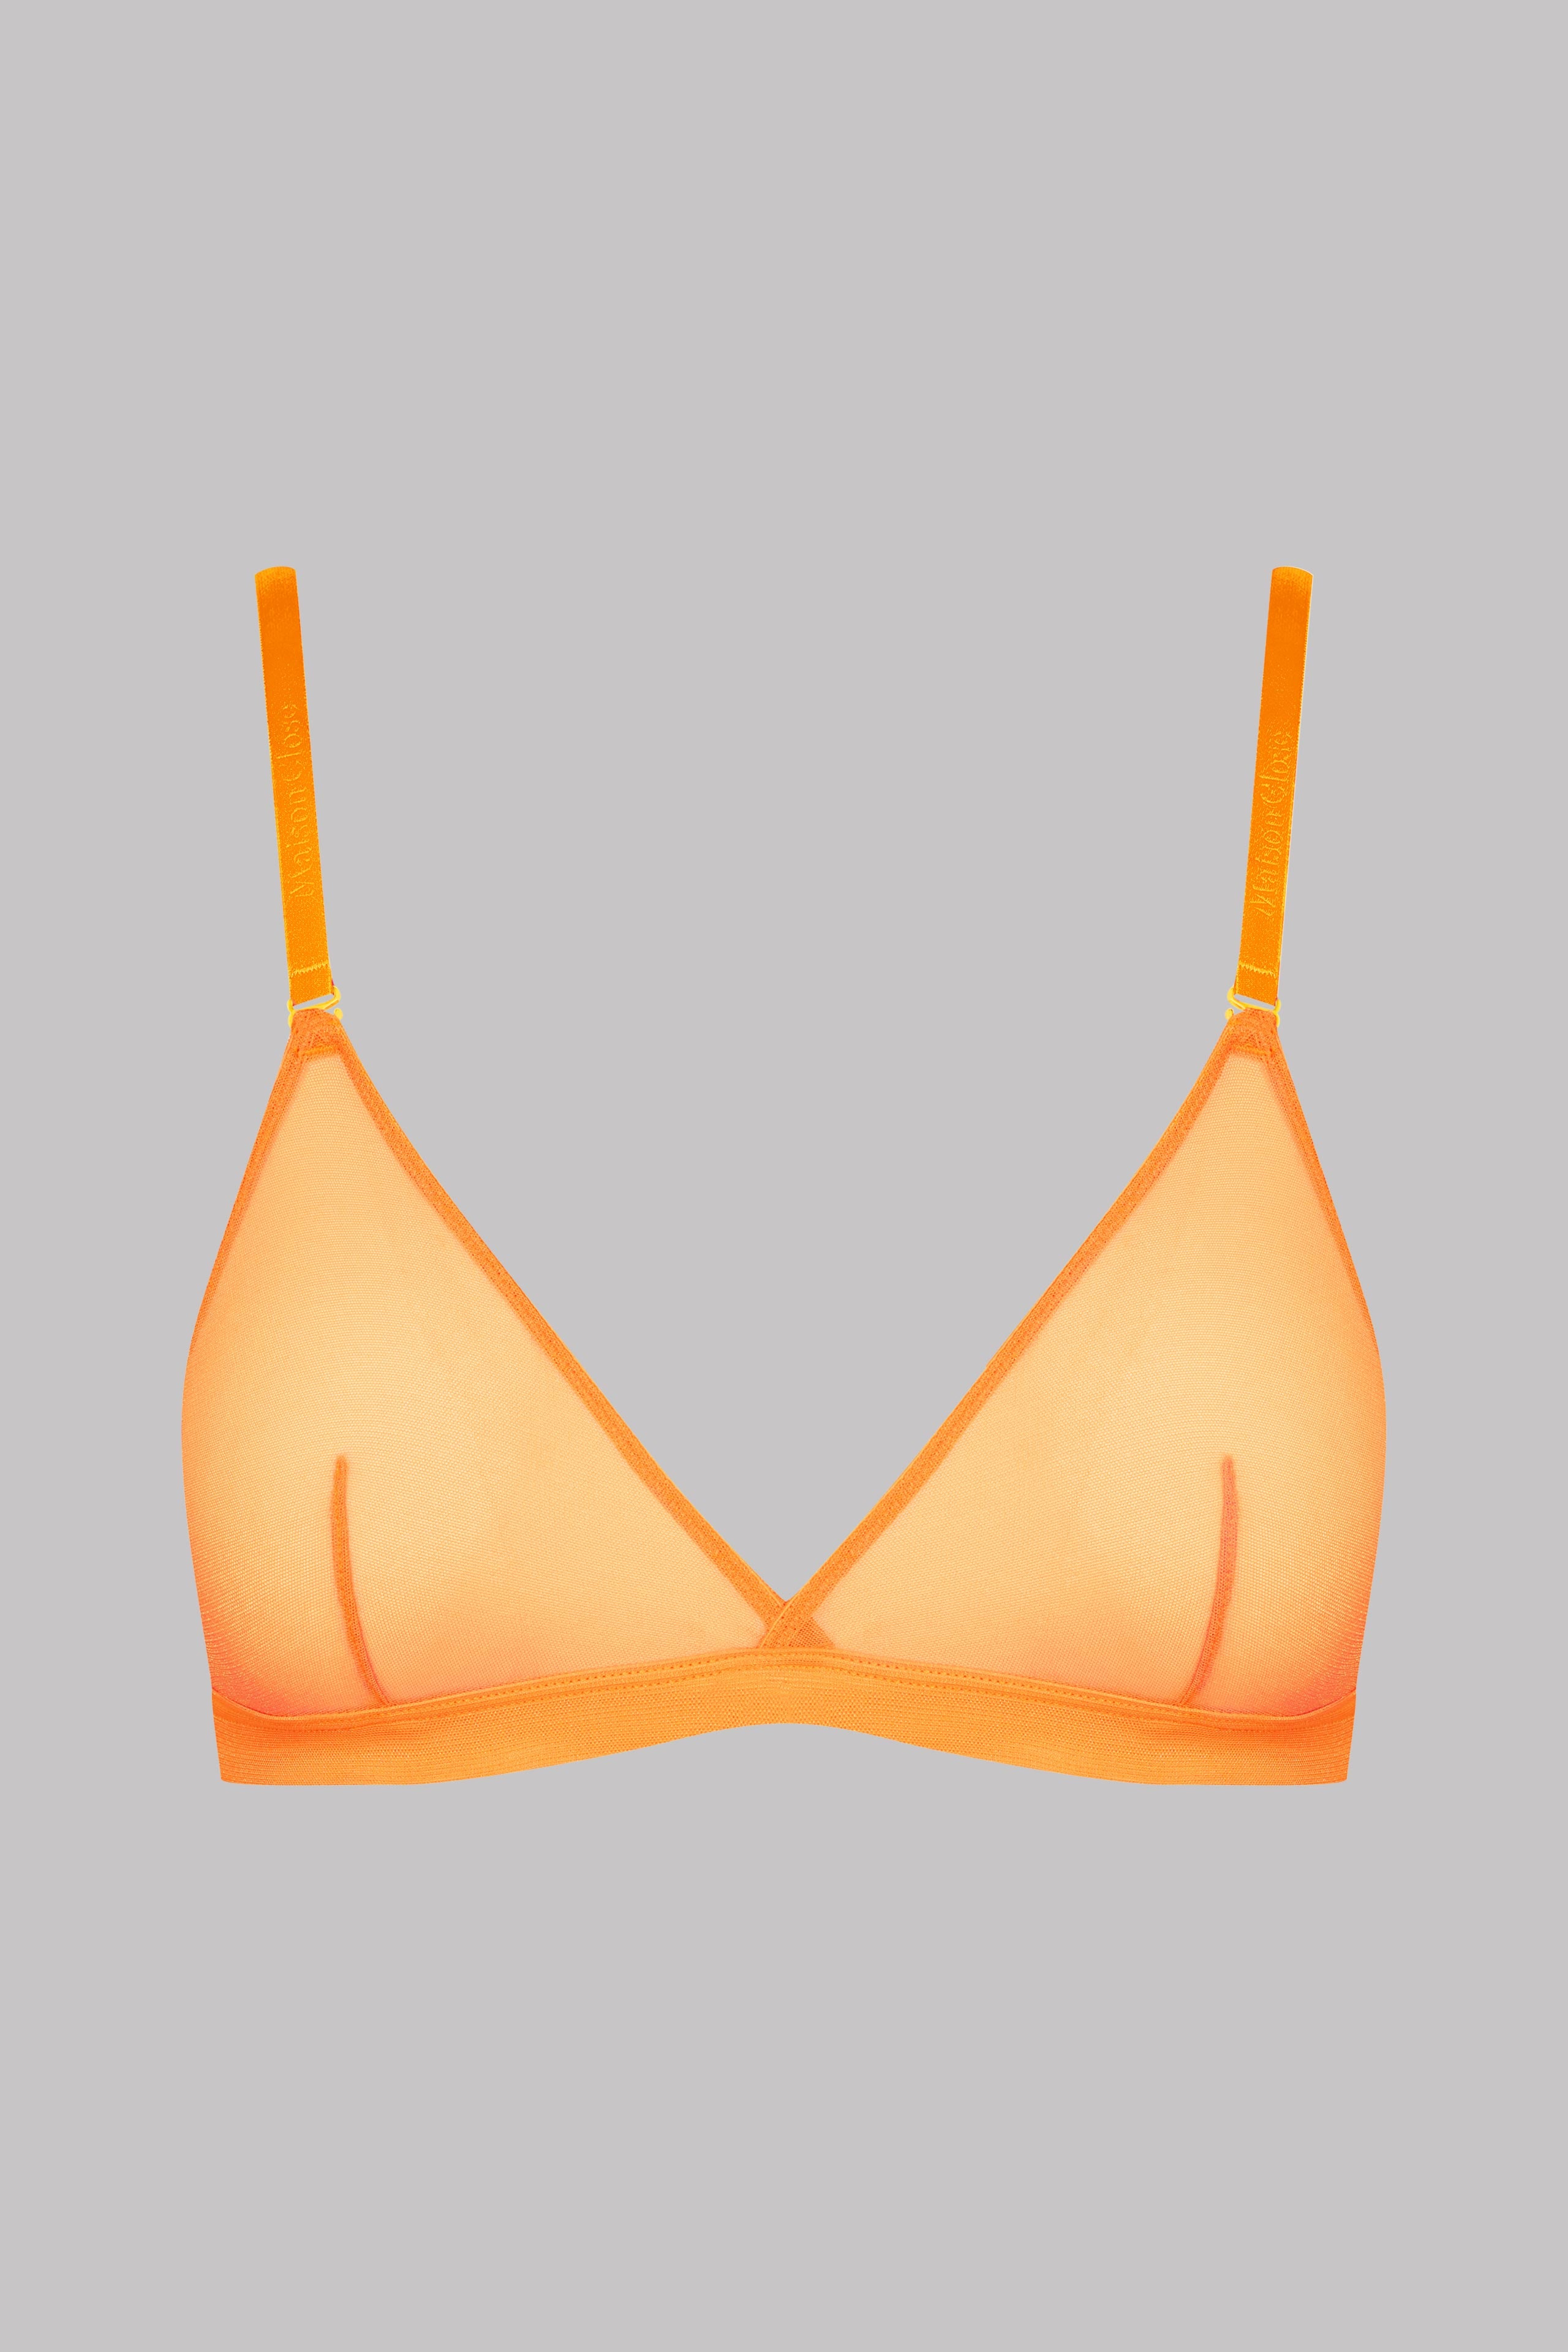 New with Tags Auden Mesh Triangle Bra Bralette Orange Size XS - $5